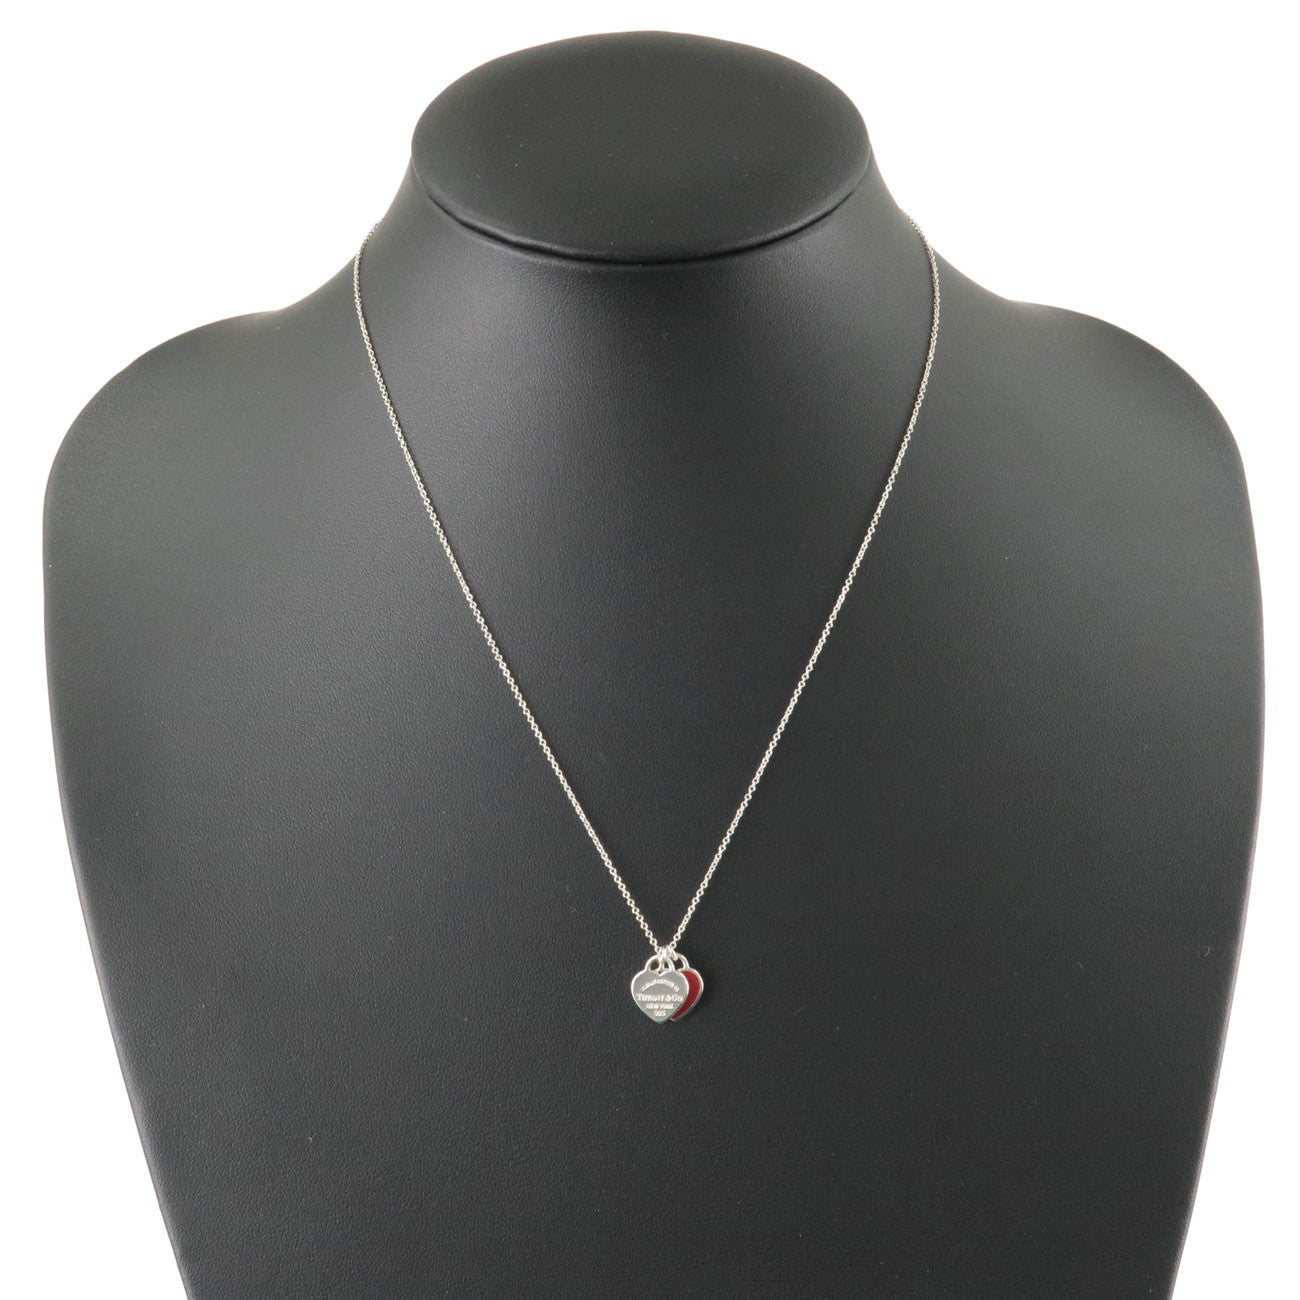 MD-371 Bollicina necklace white/red – Tiffany Treloar